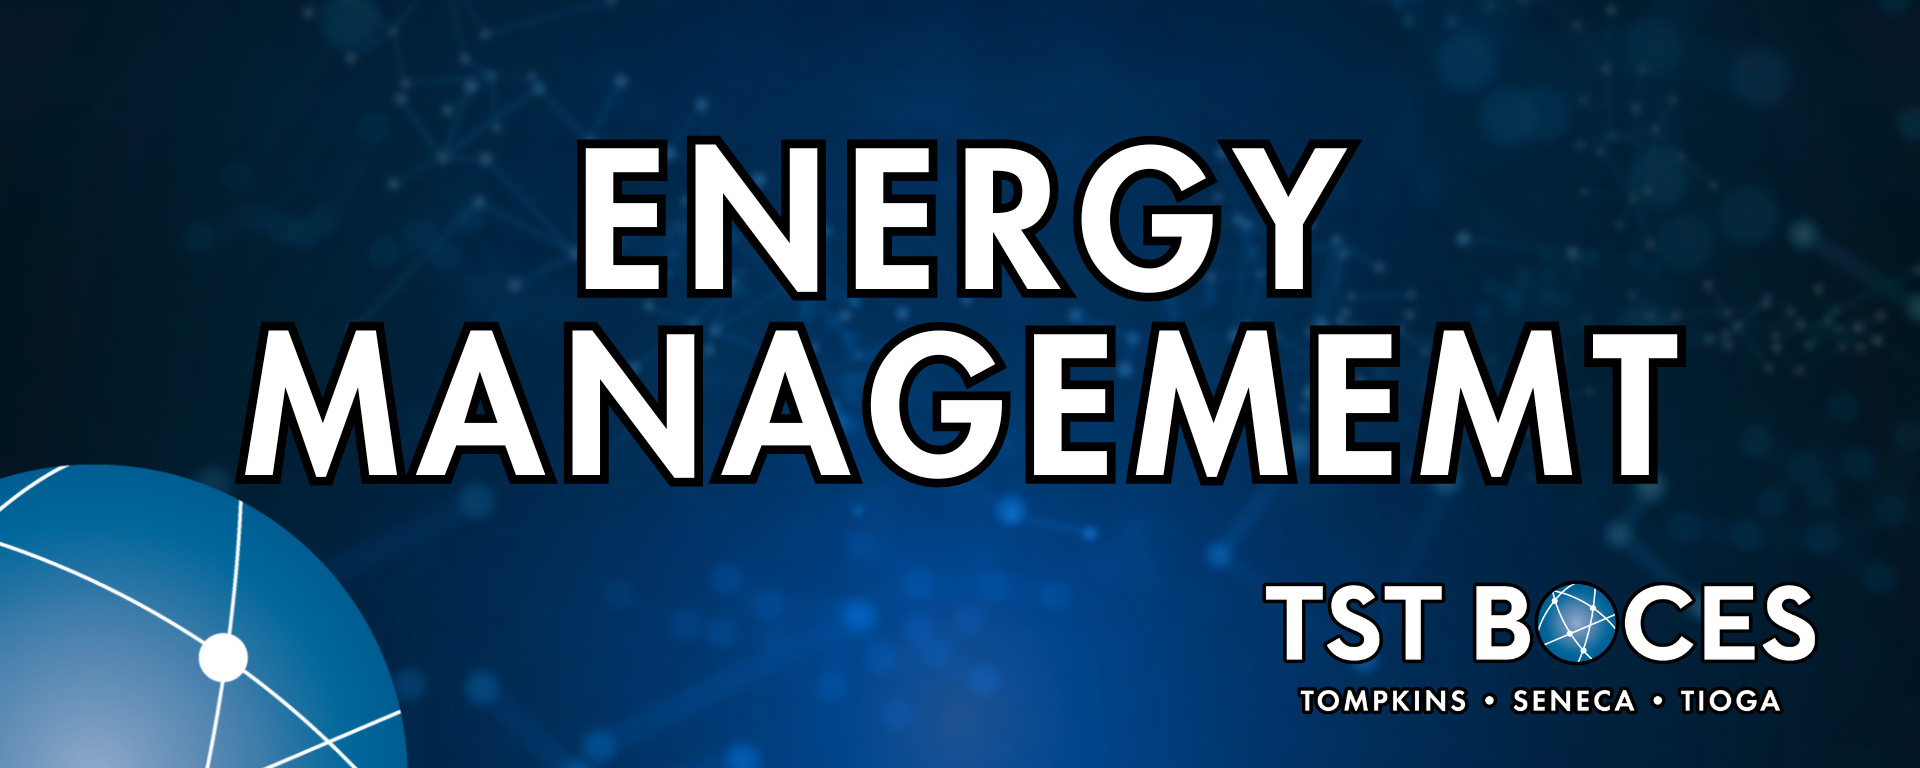 energy management banner